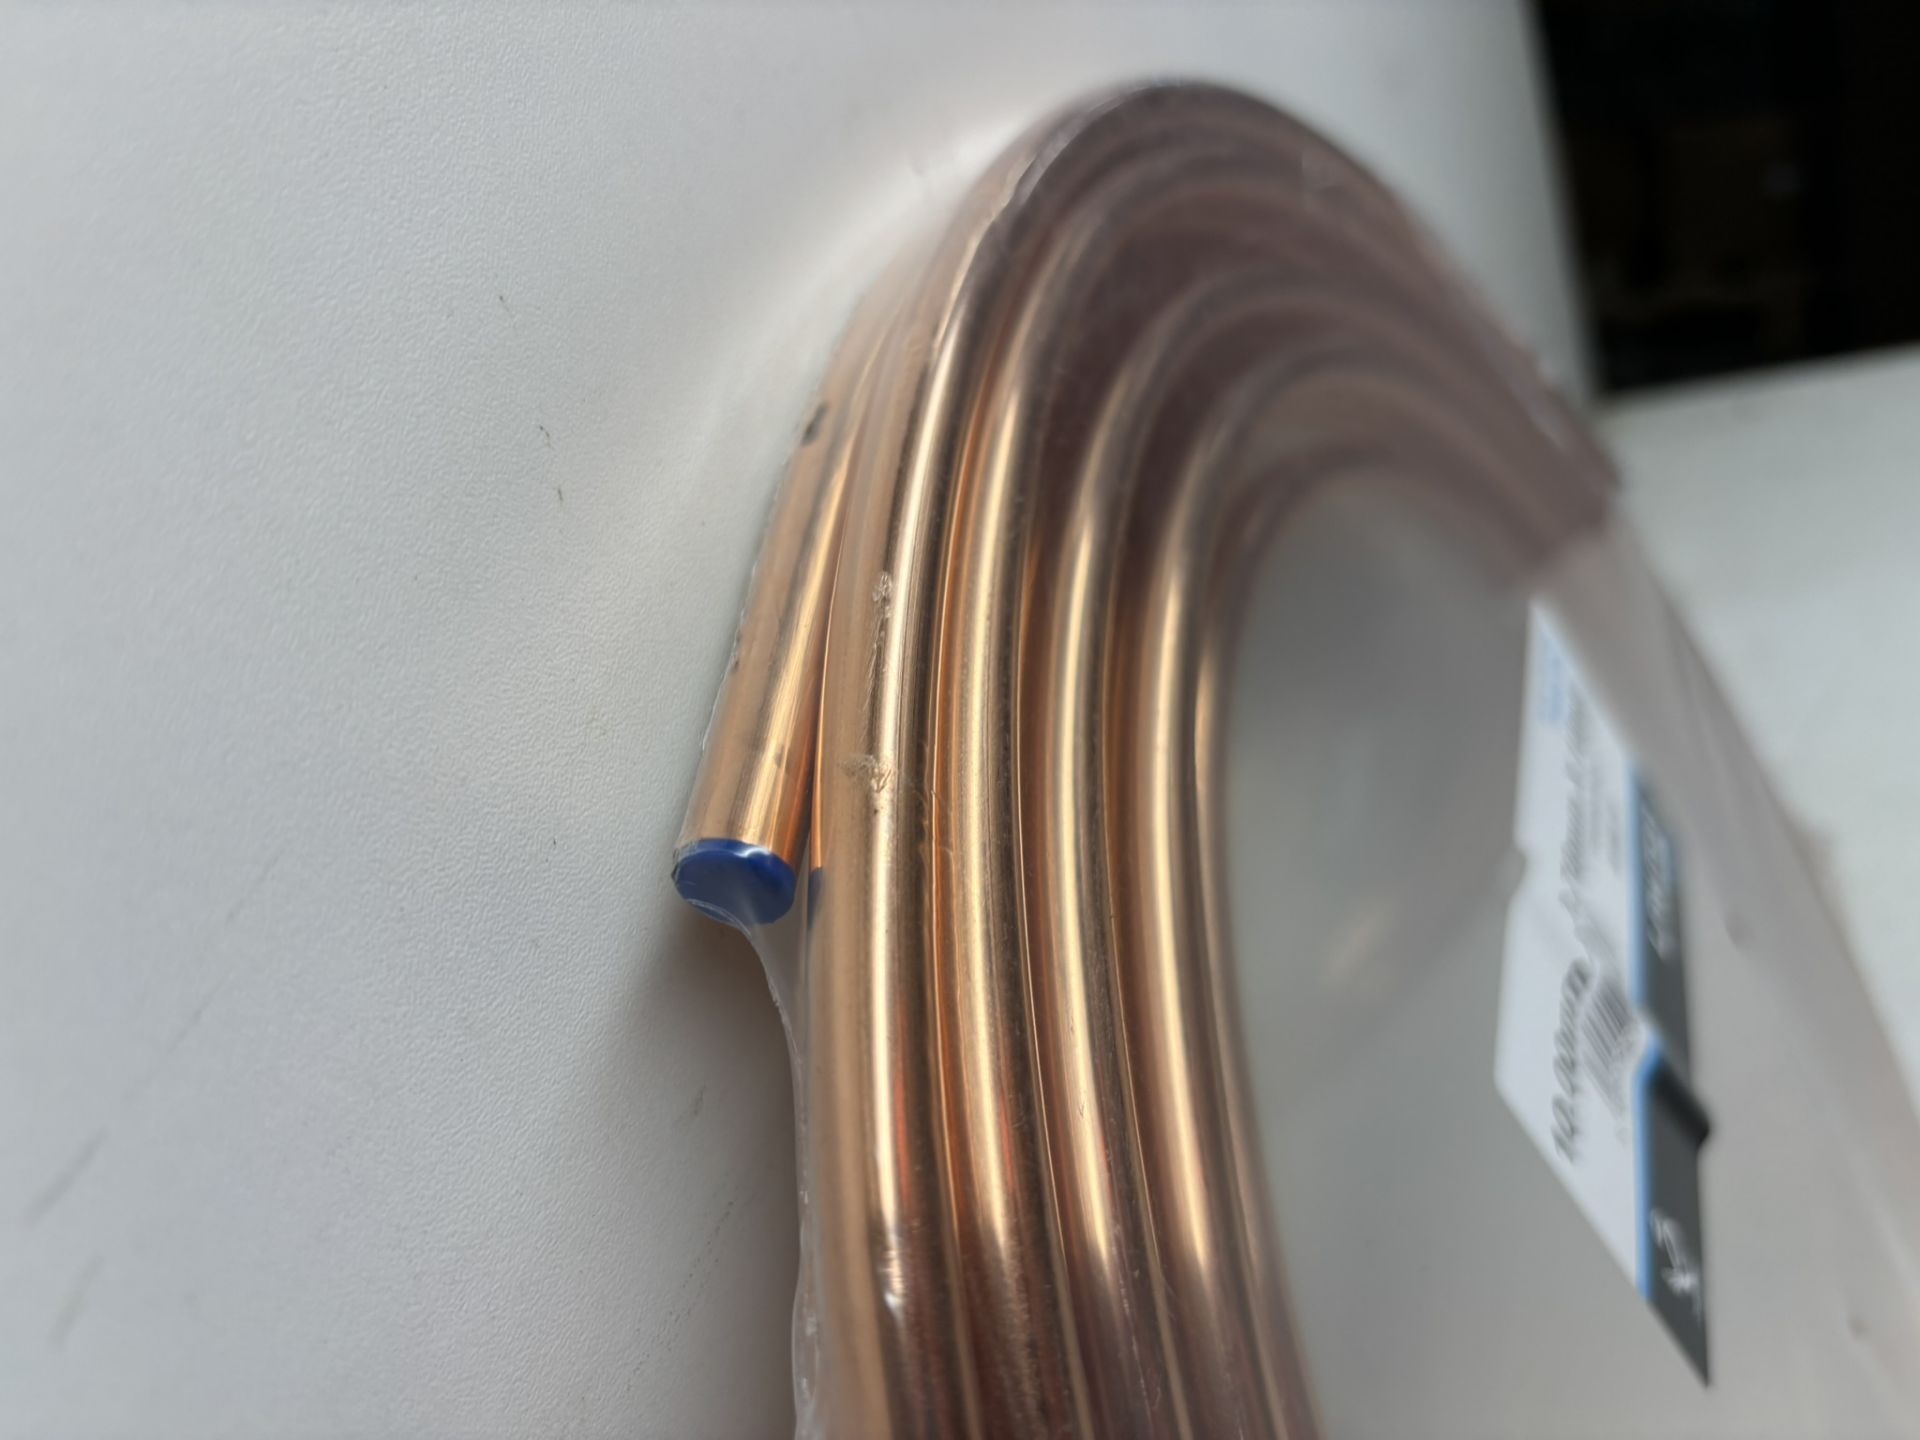 3 x Lawton 10.00mm x 0.70mm x 10Mtr Copper Plumbing Tube Coils - Image 2 of 3